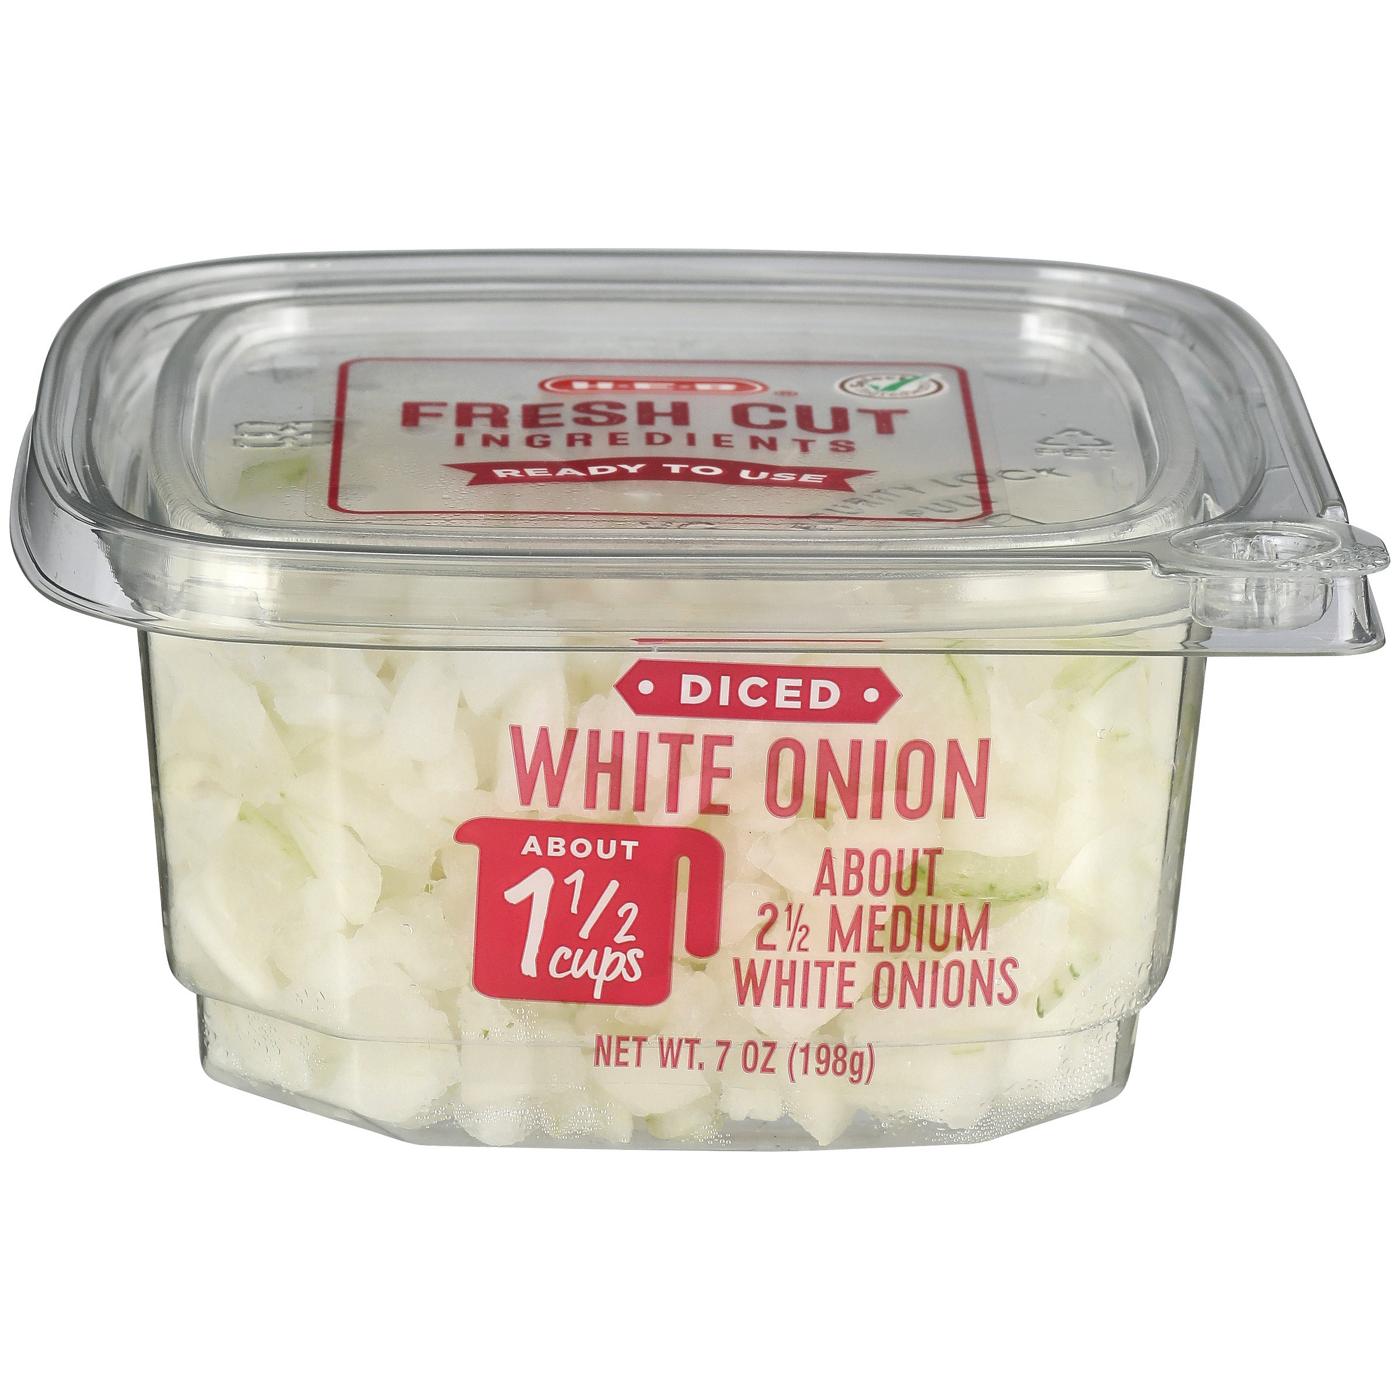 H-E-B Fresh Diced White Onions; image 1 of 2